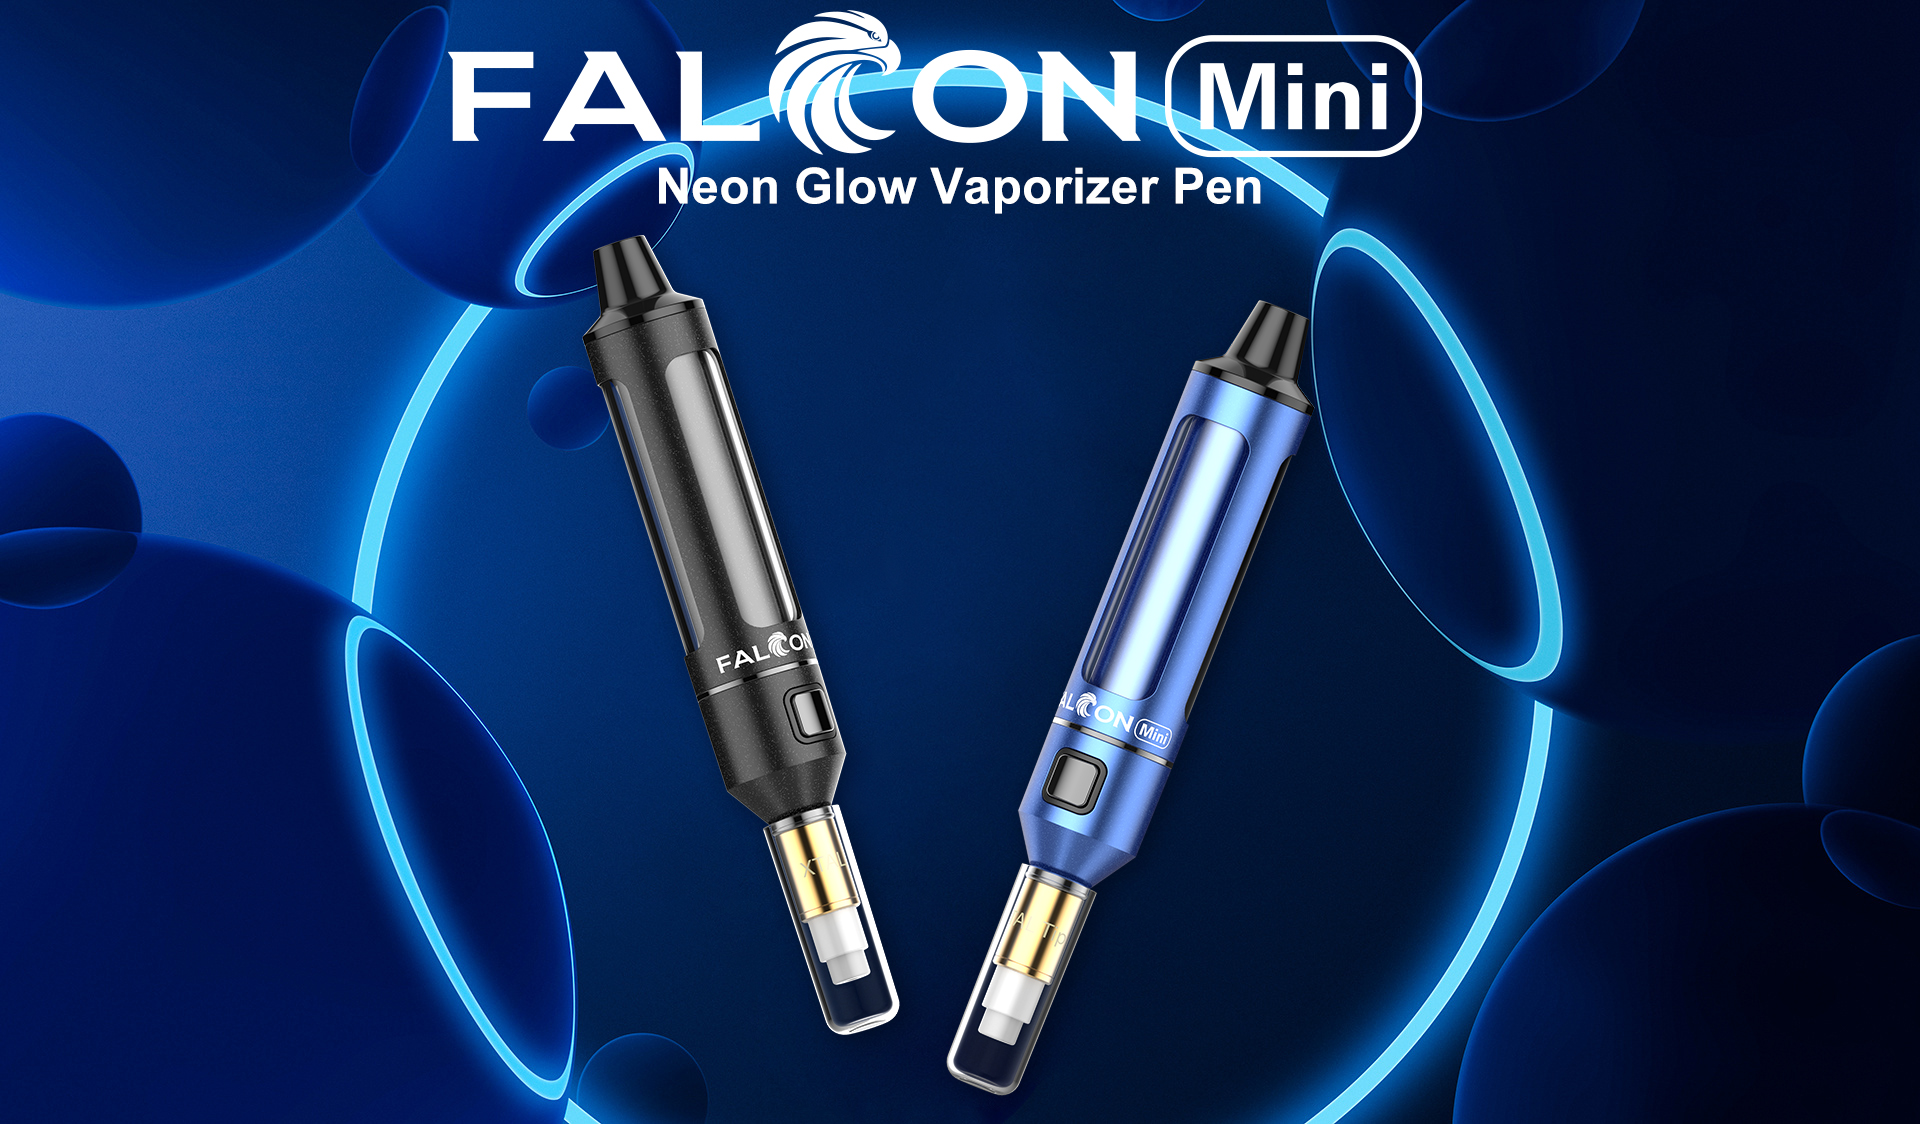 Yocan falcon mini neon glow vaporizer pen is better than you think.